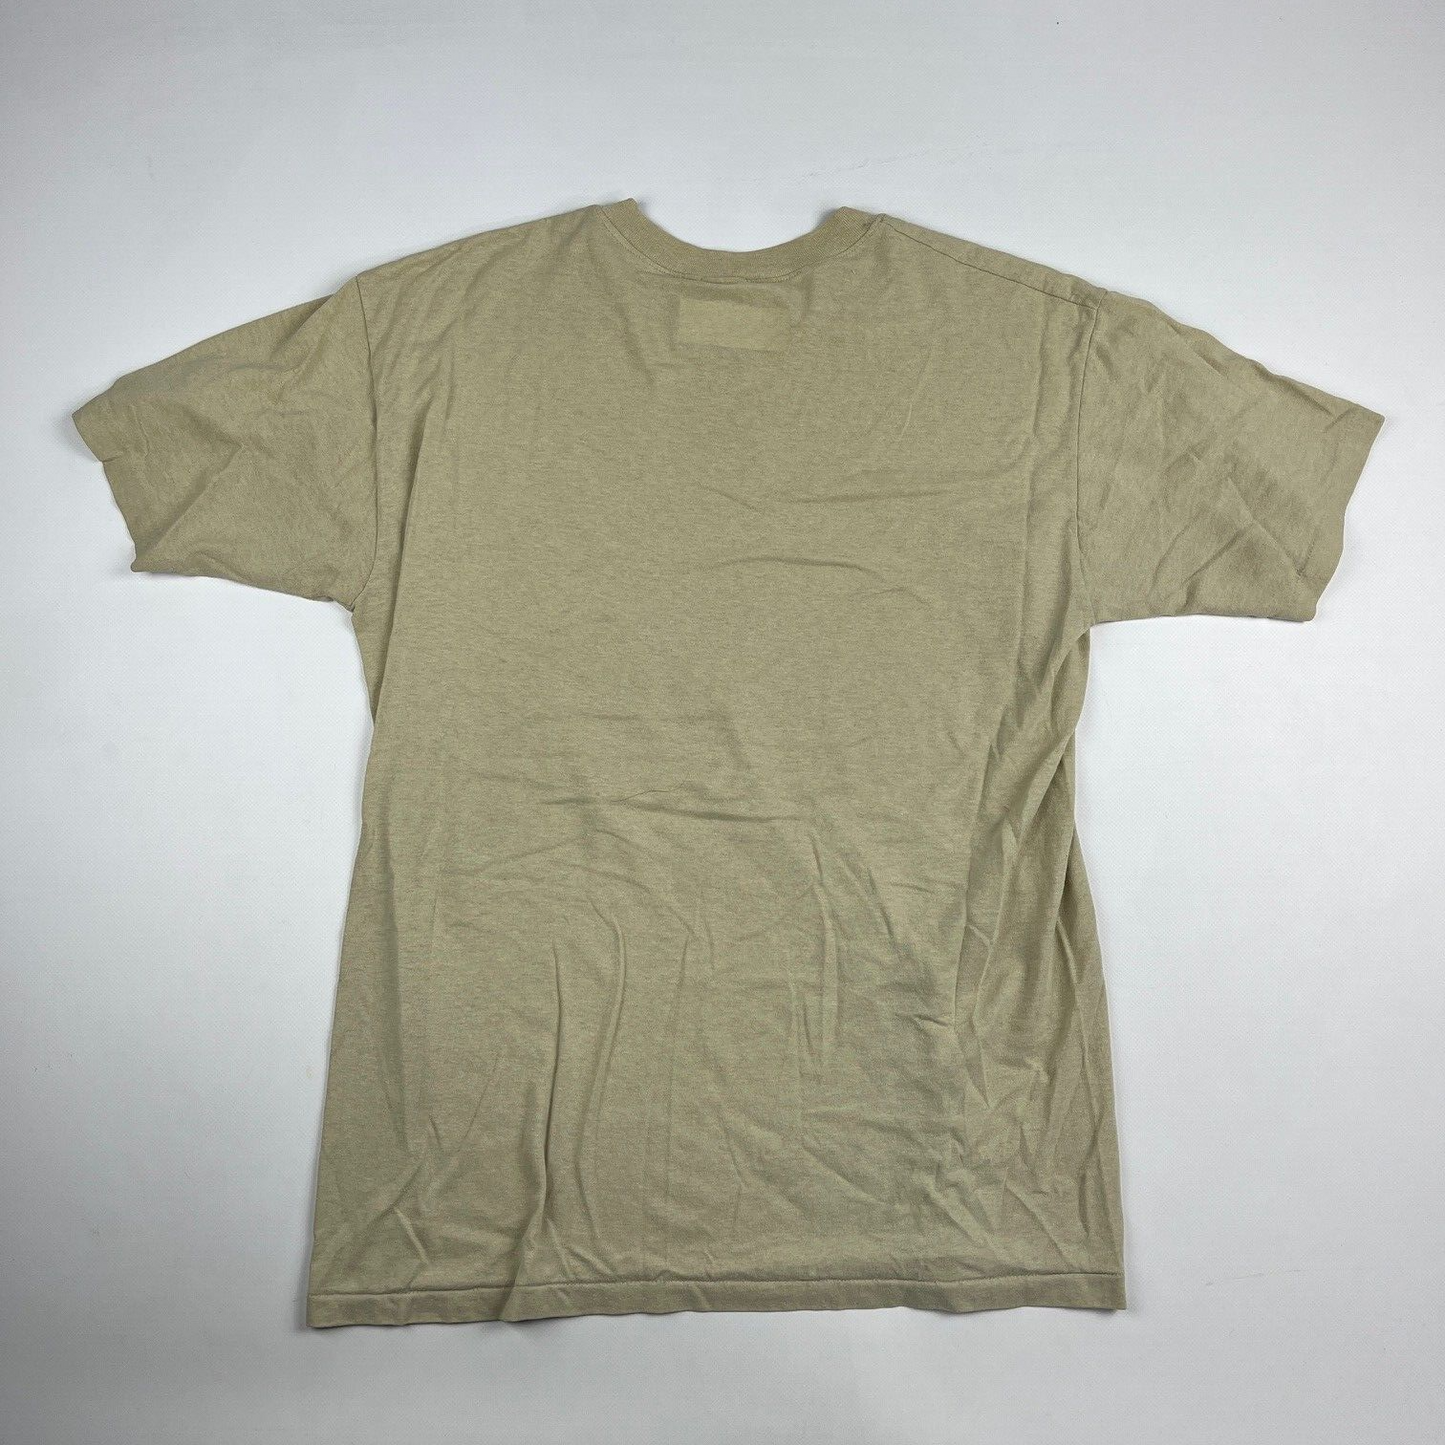 VINTAGE Blank Tan Adult Large Men Shirt 90s Military